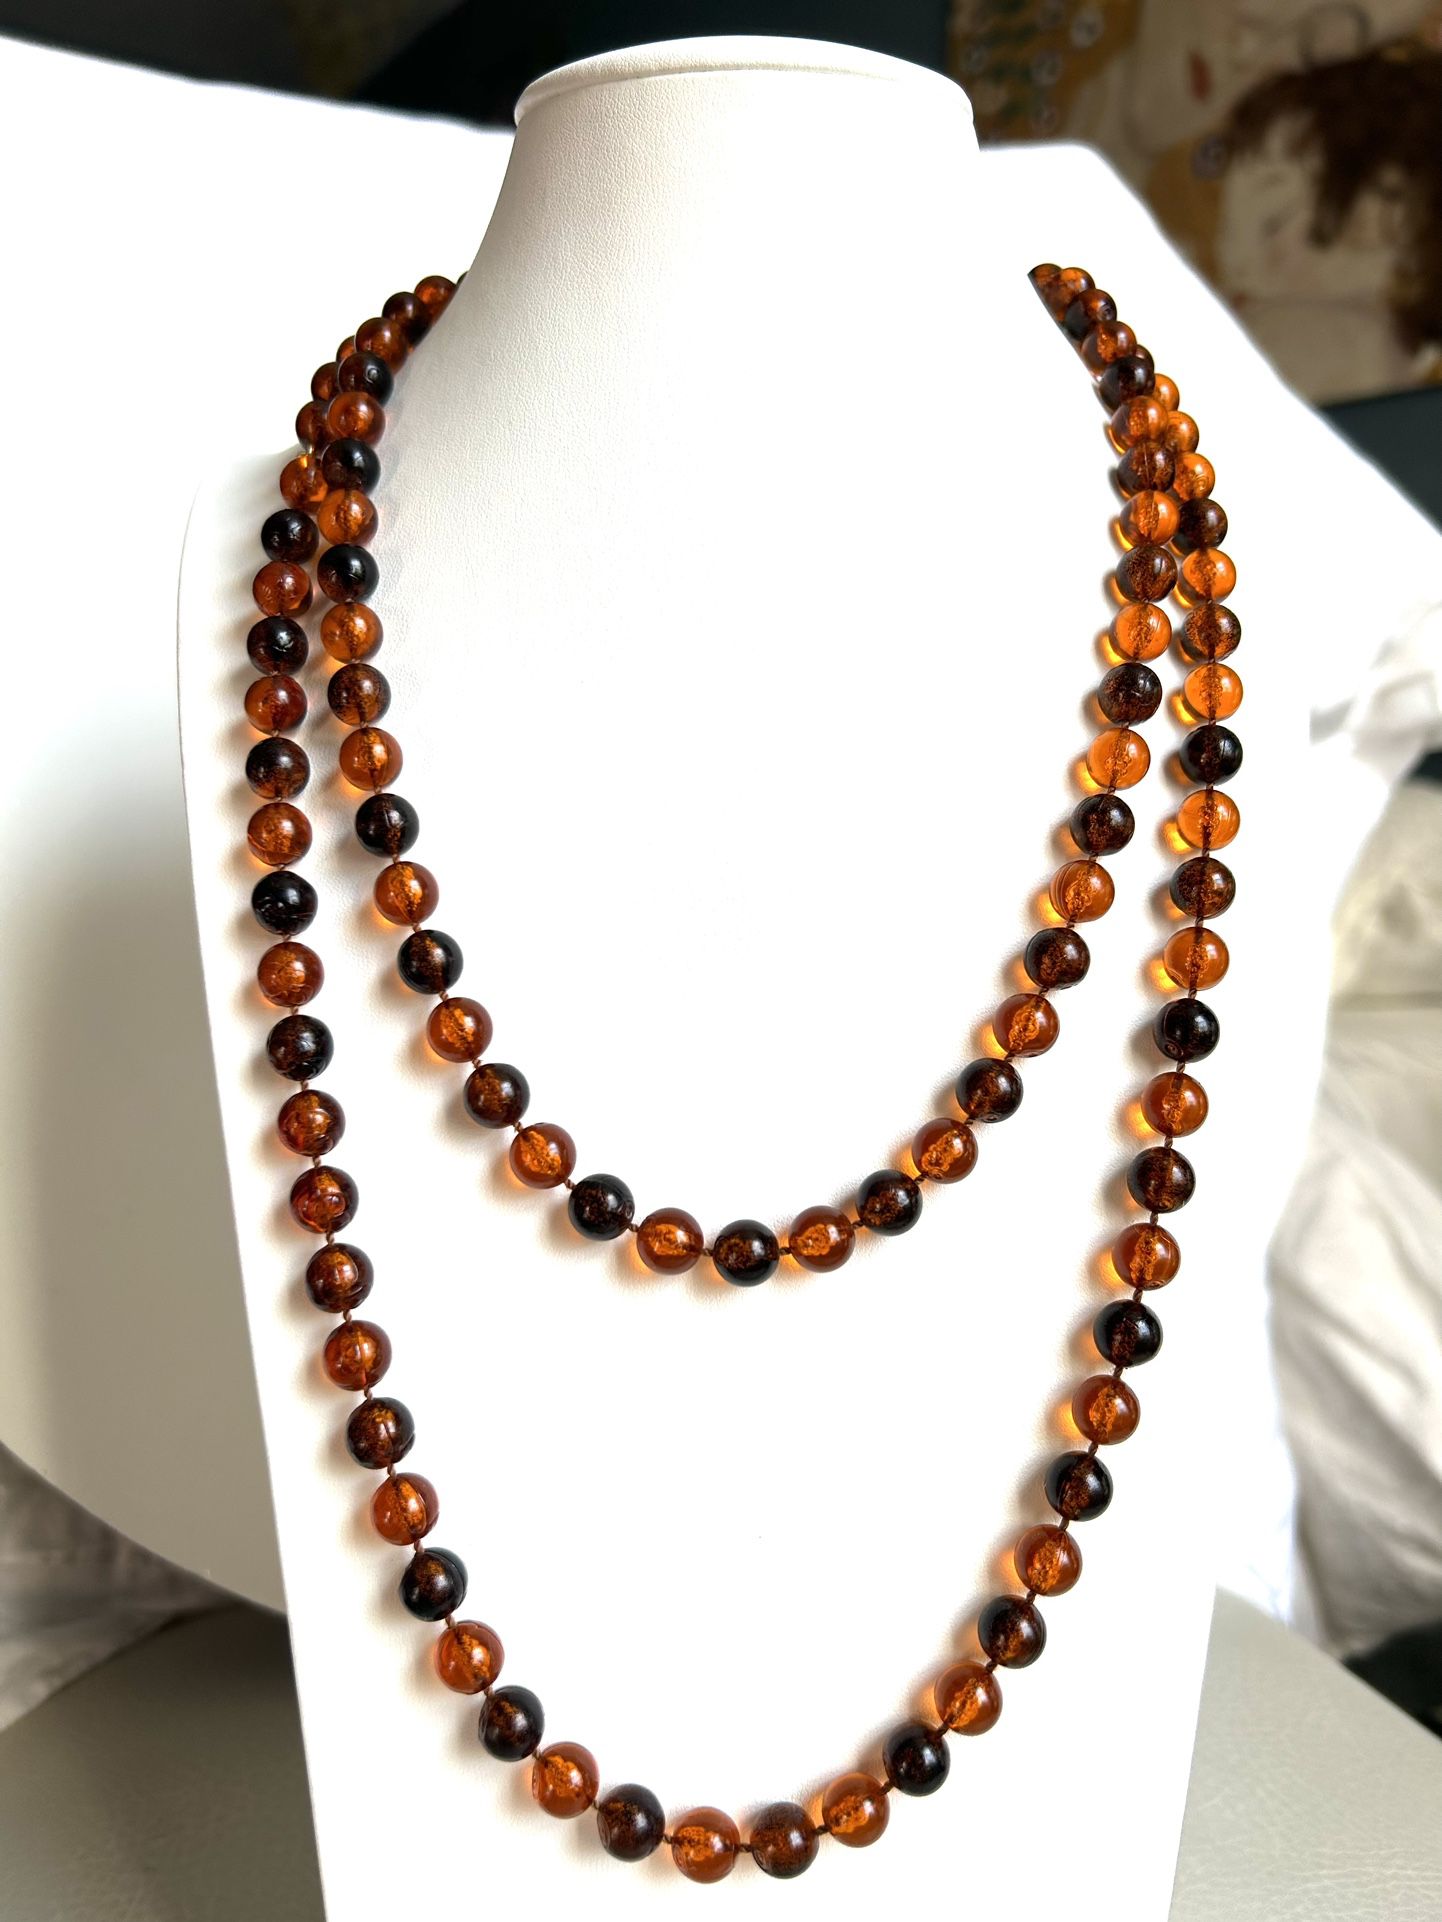 stunning vintage Transparent Amber resin beads necklace handmade